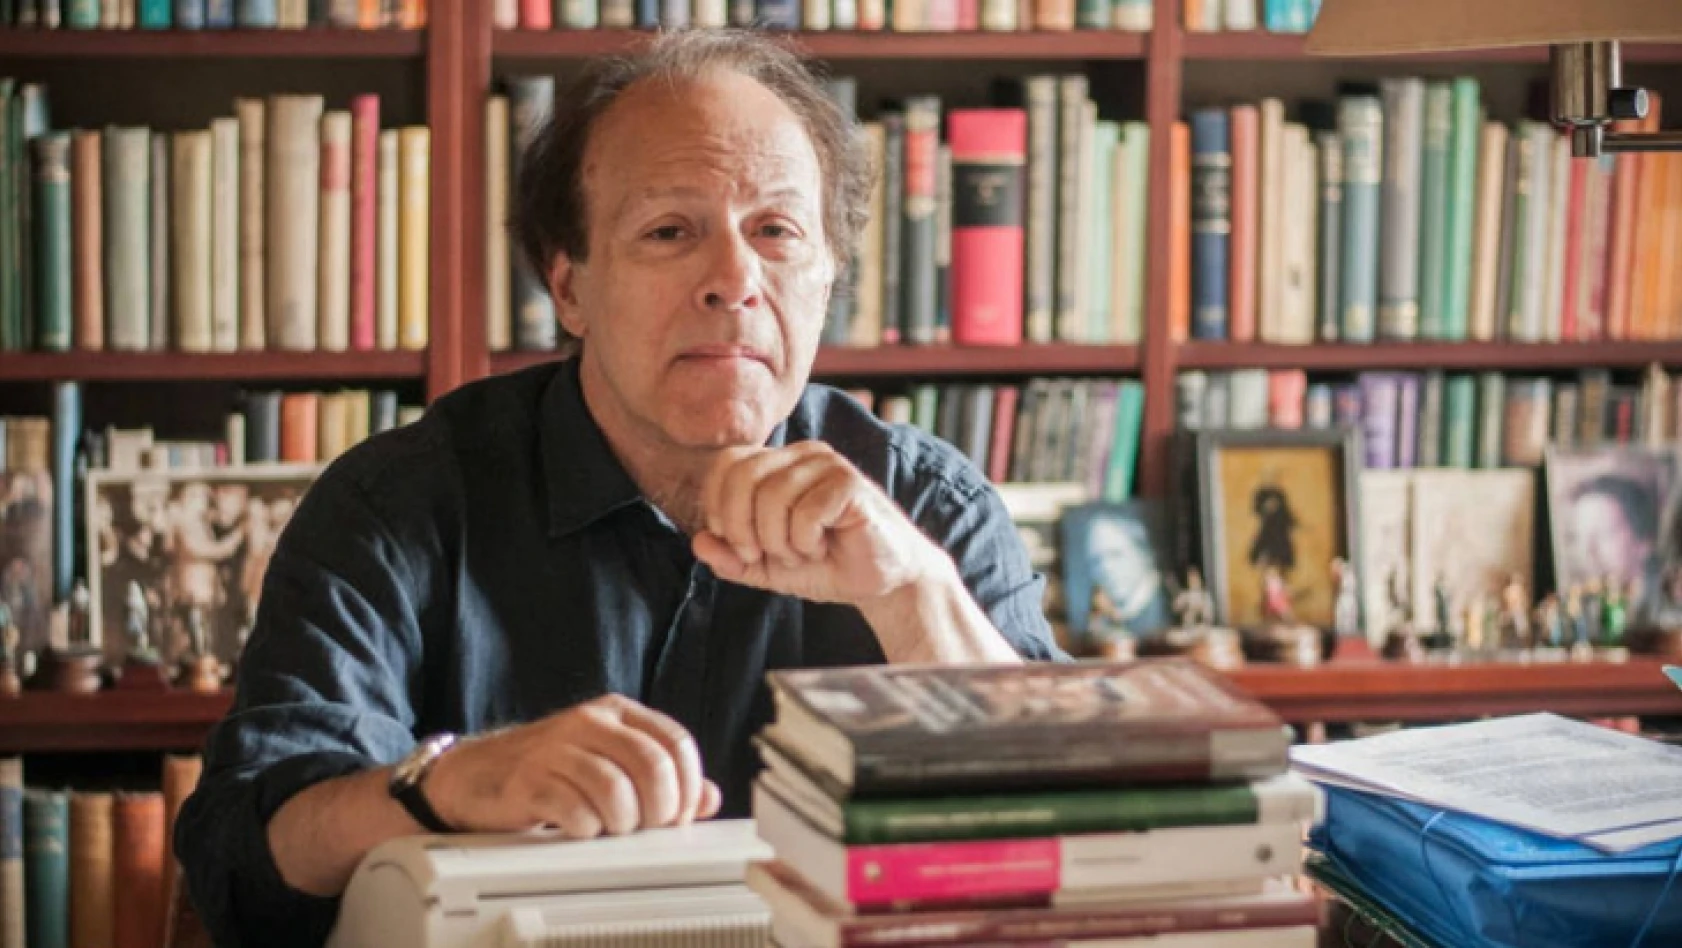 İspanyol yazar Javier Marias yaşamını yitirdi